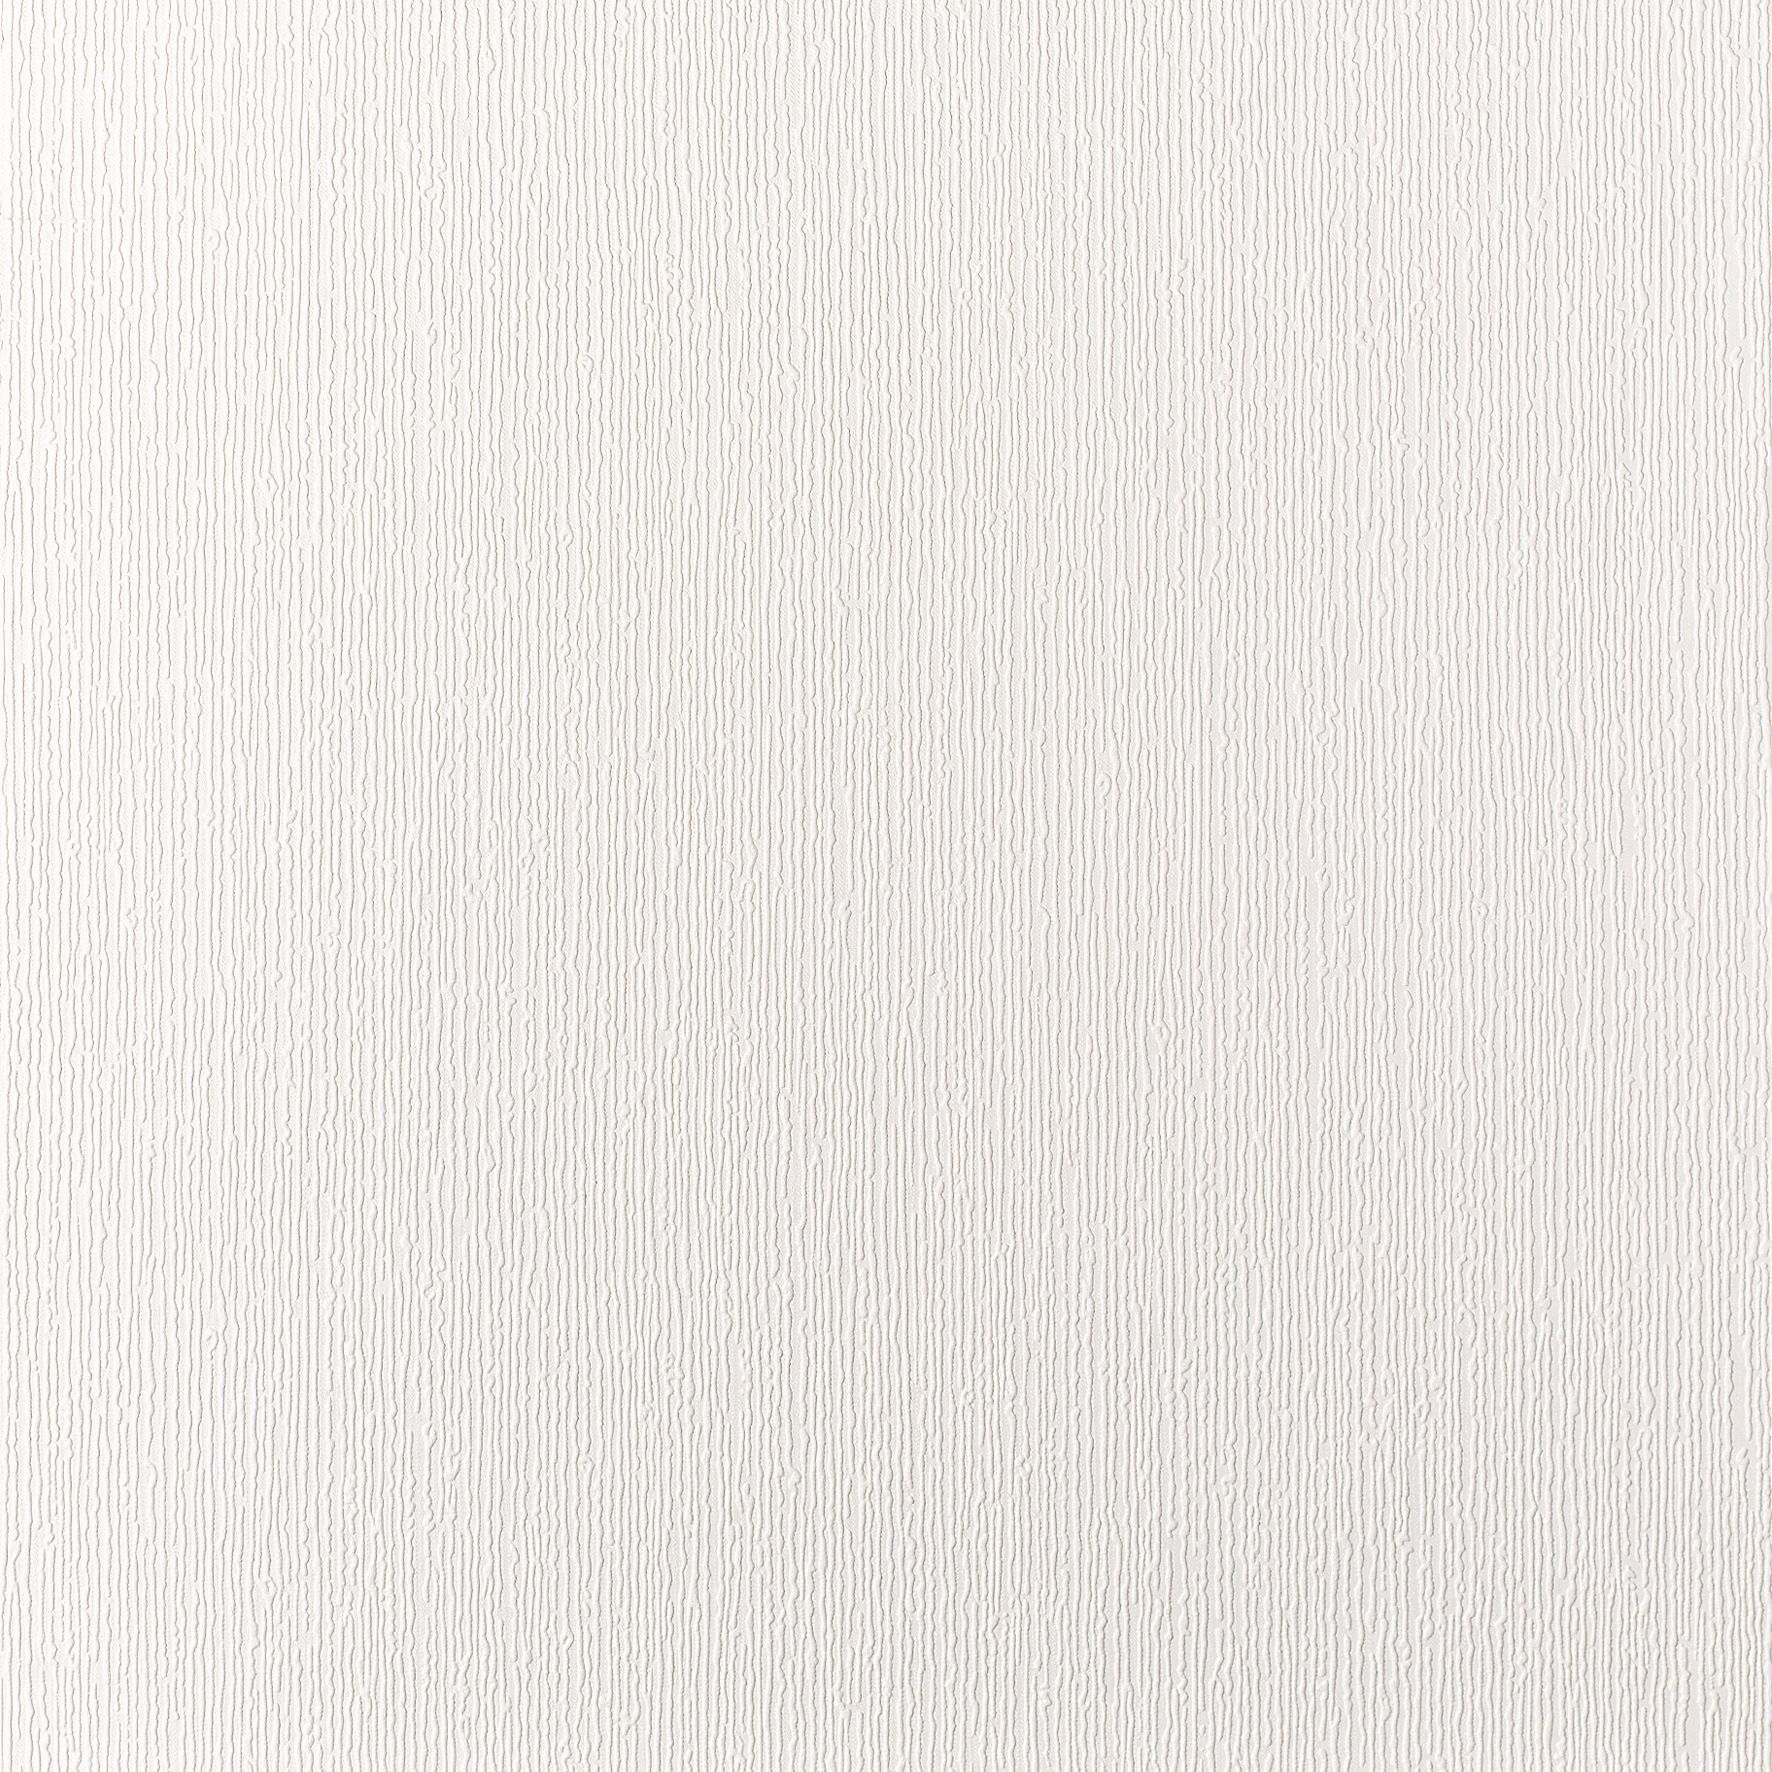 Superfresco White String Blown Wallpaper Diy At Bandq